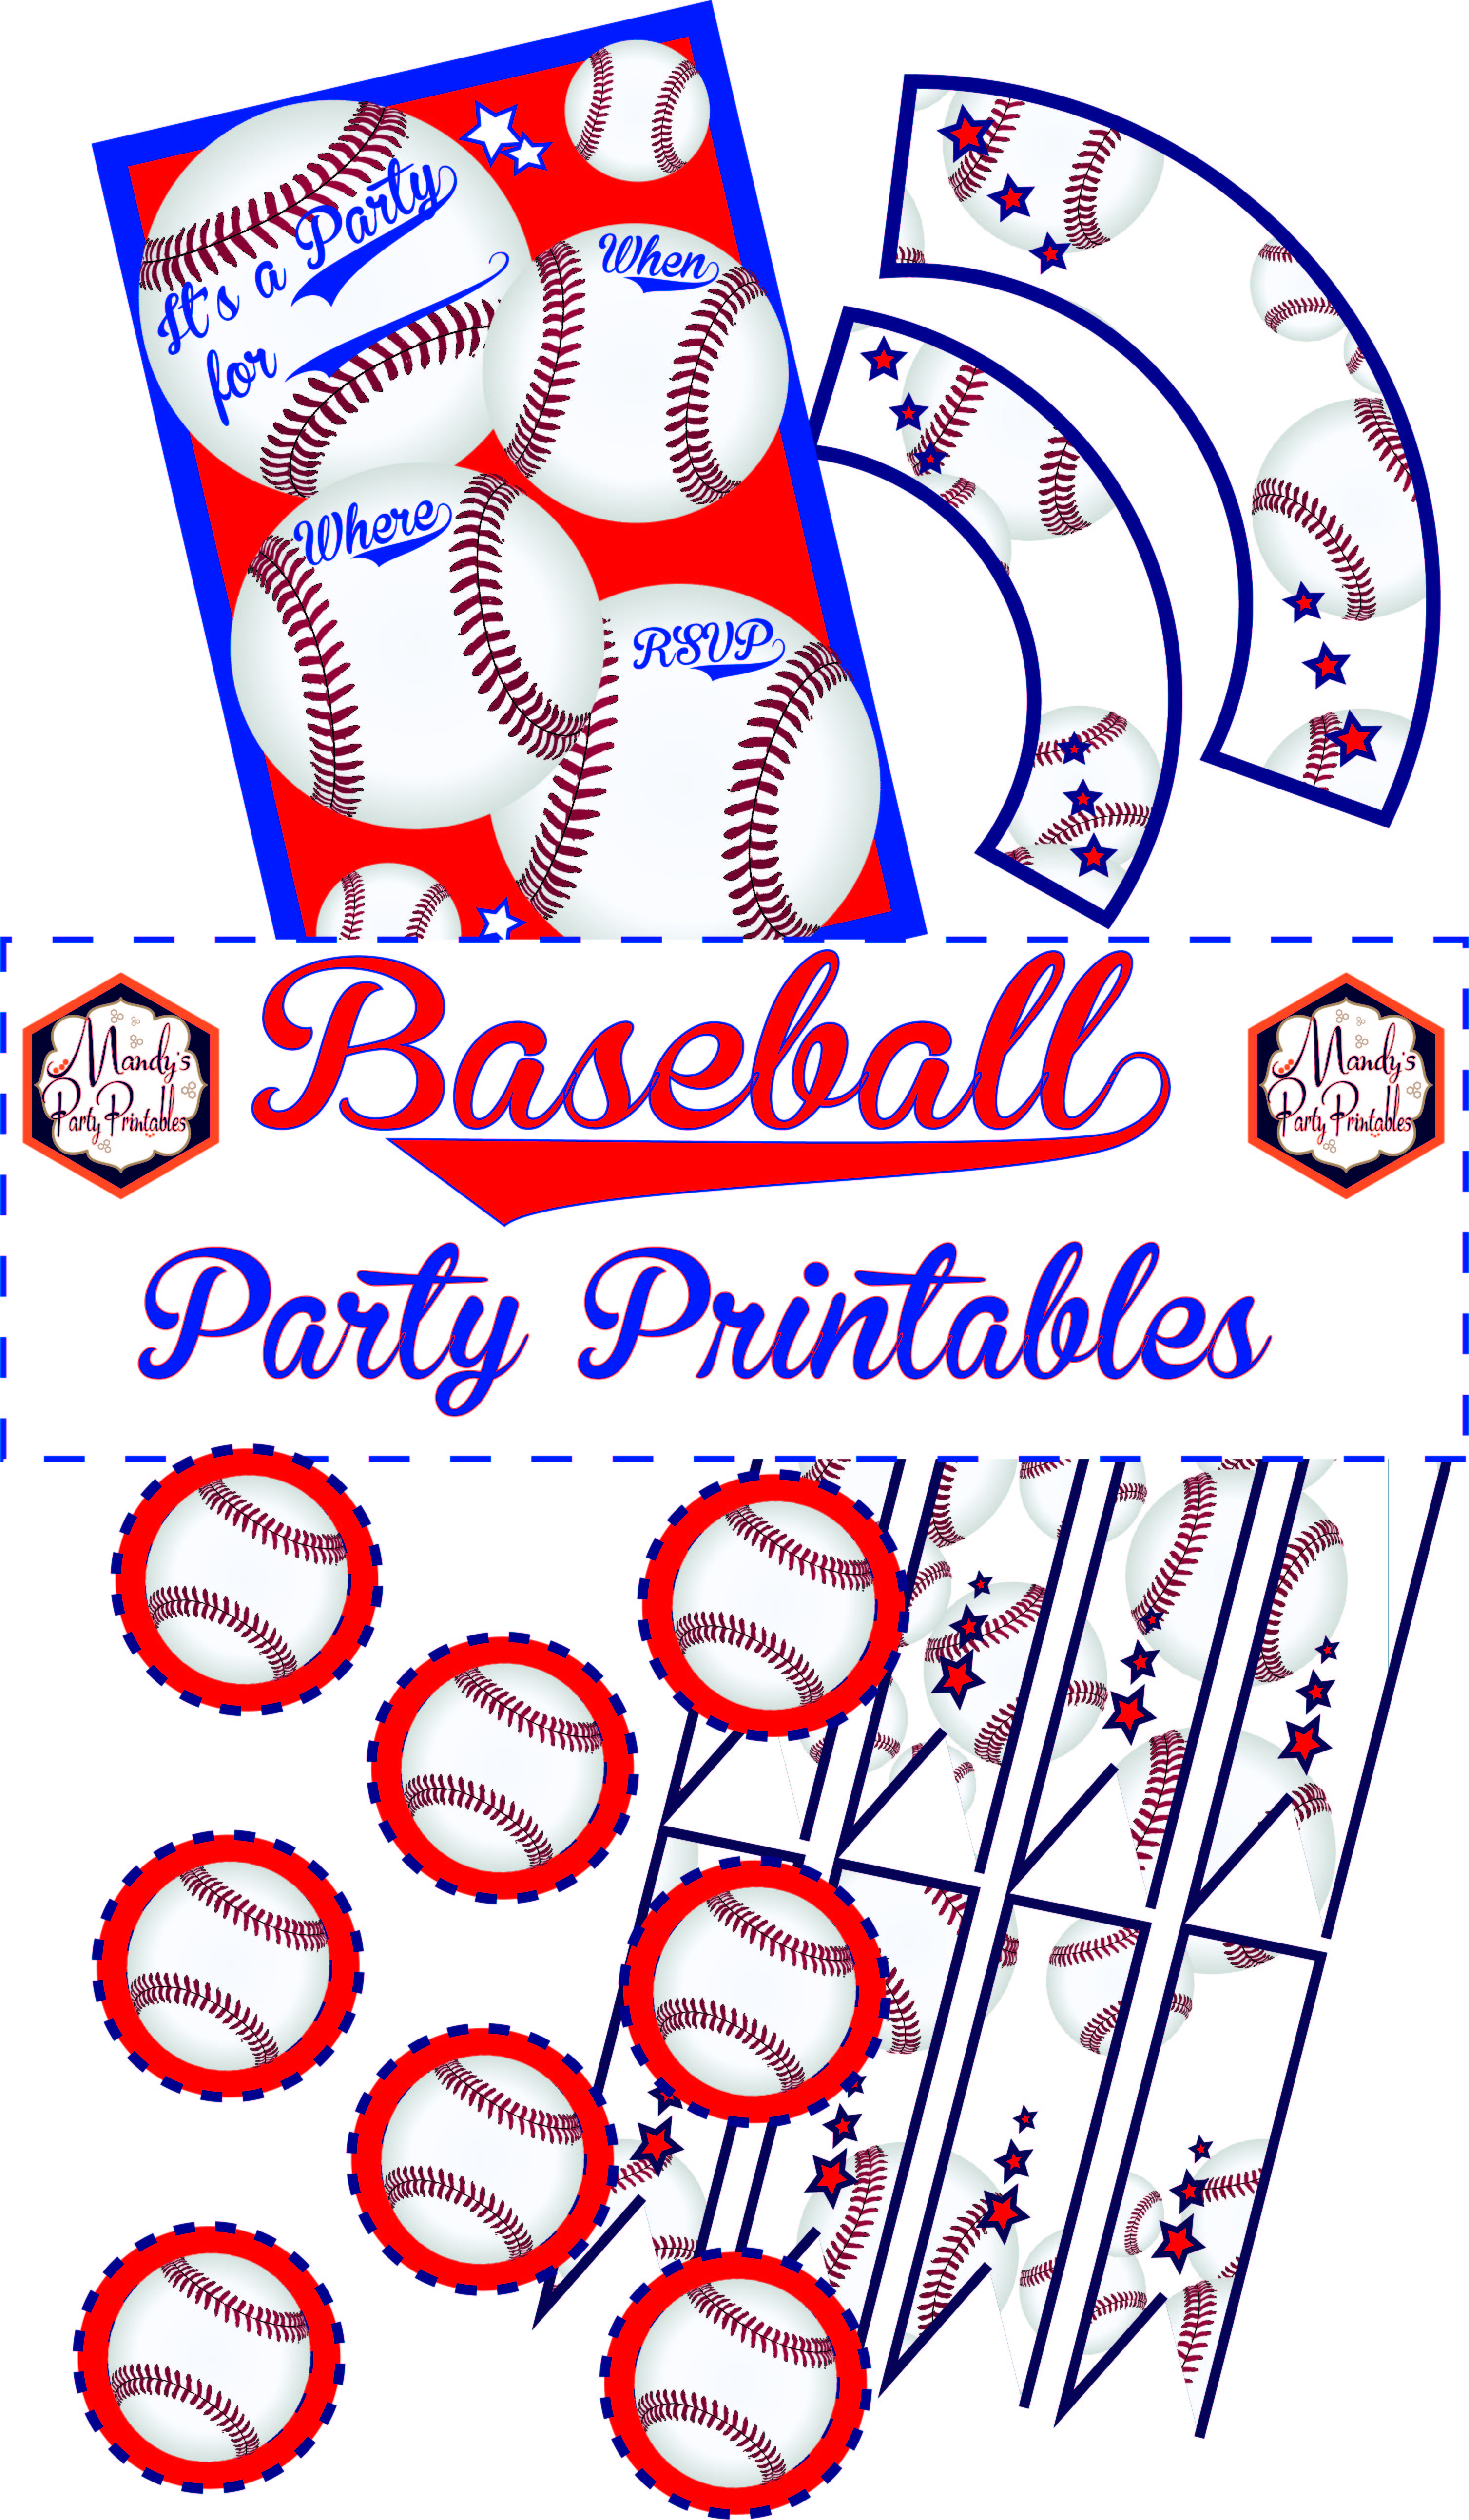 Free Baseball Printables via Mandy's Party Printables